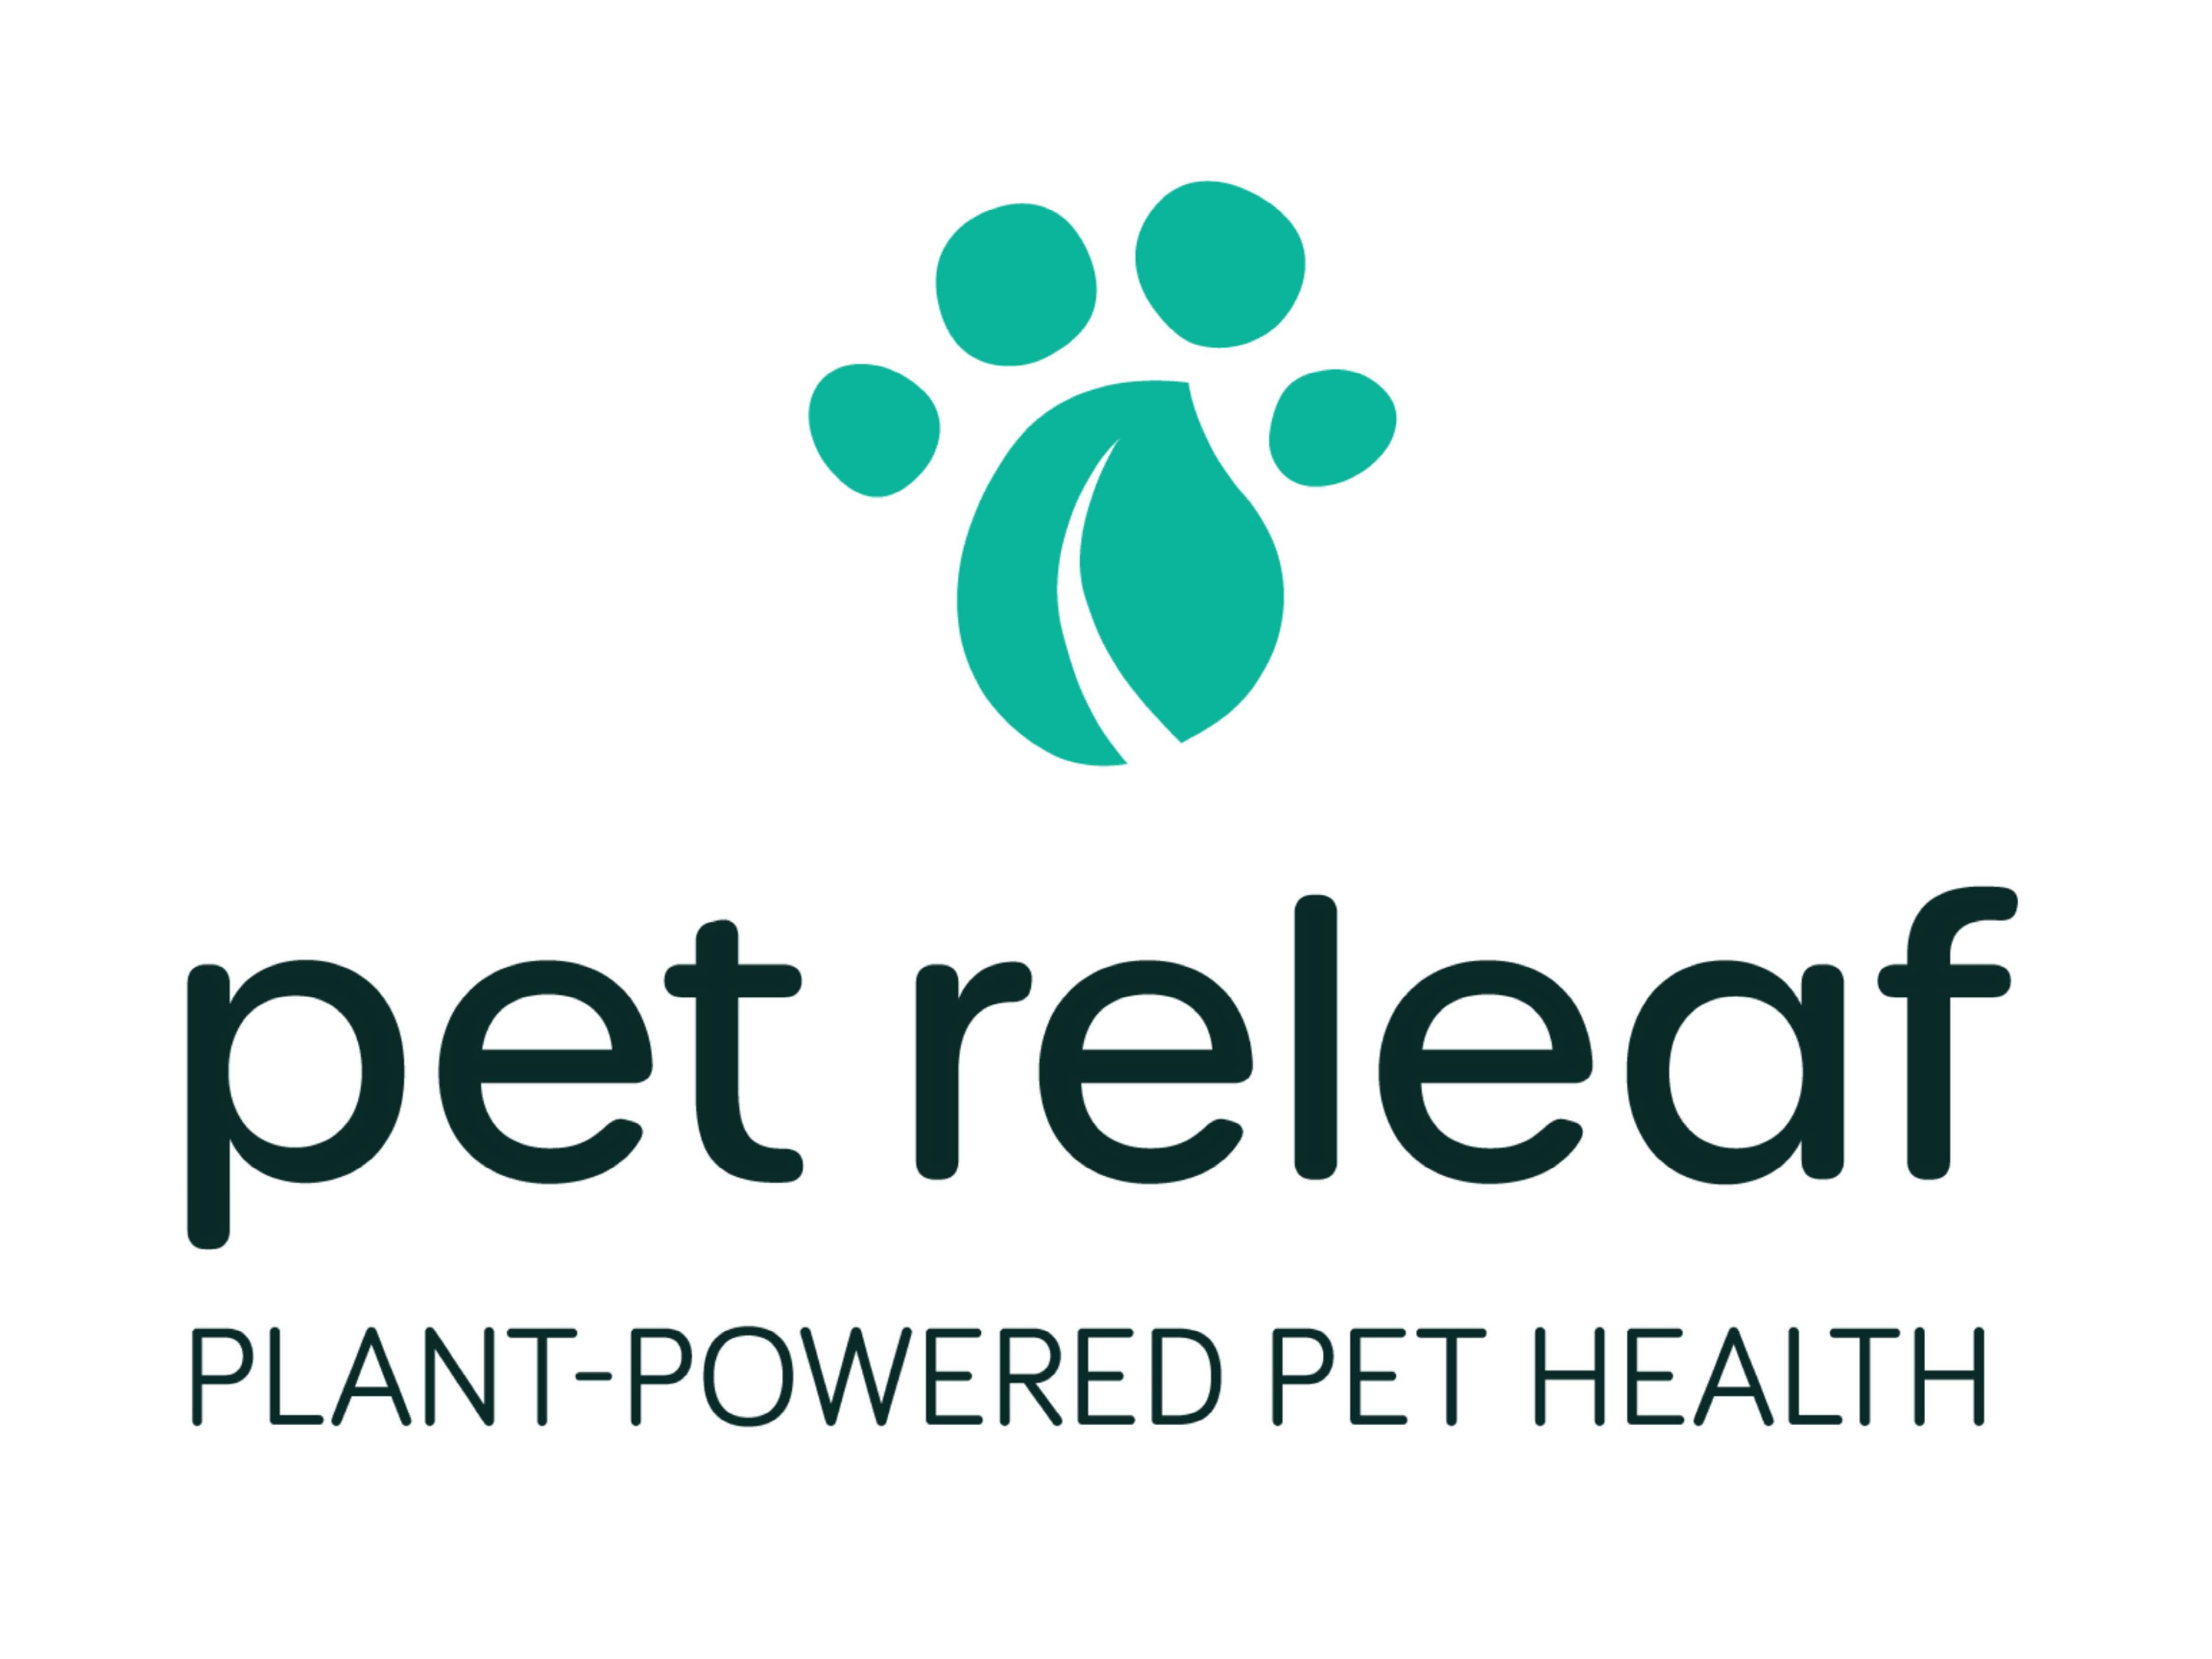 PET RELEAF PLANT-POWERED PET HEALTH